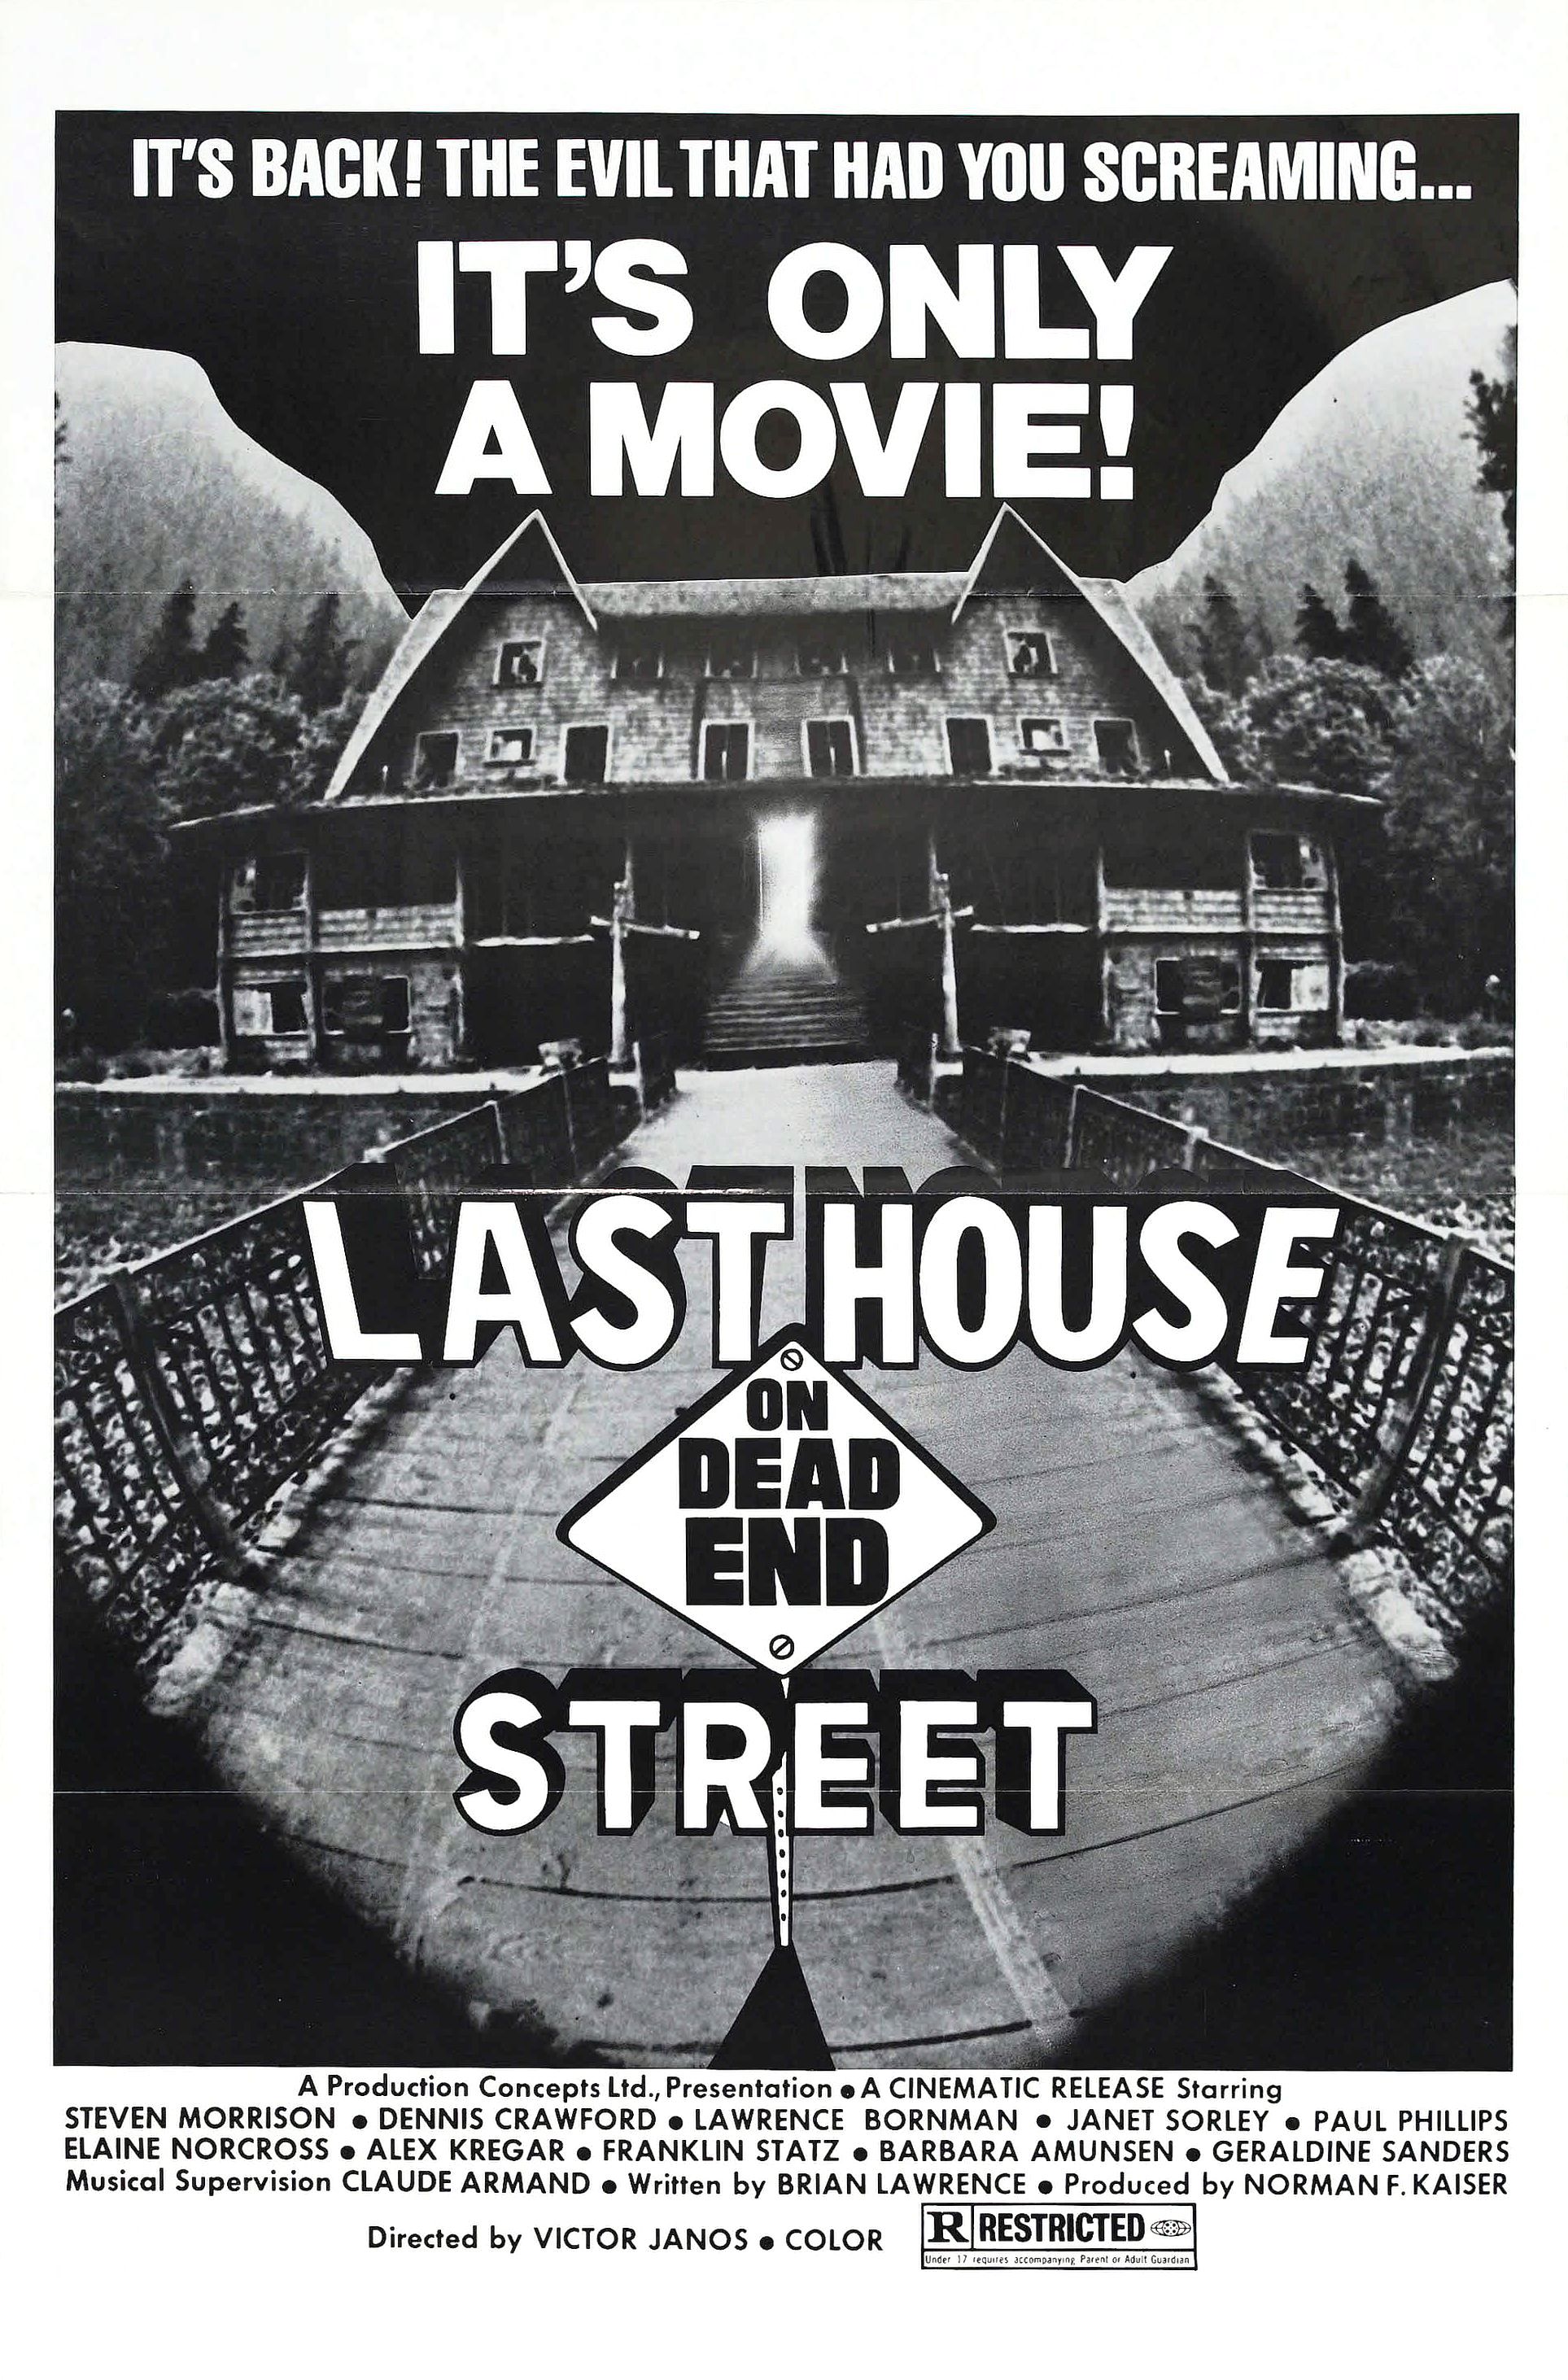 Last house on dead end street poster 01.jpg